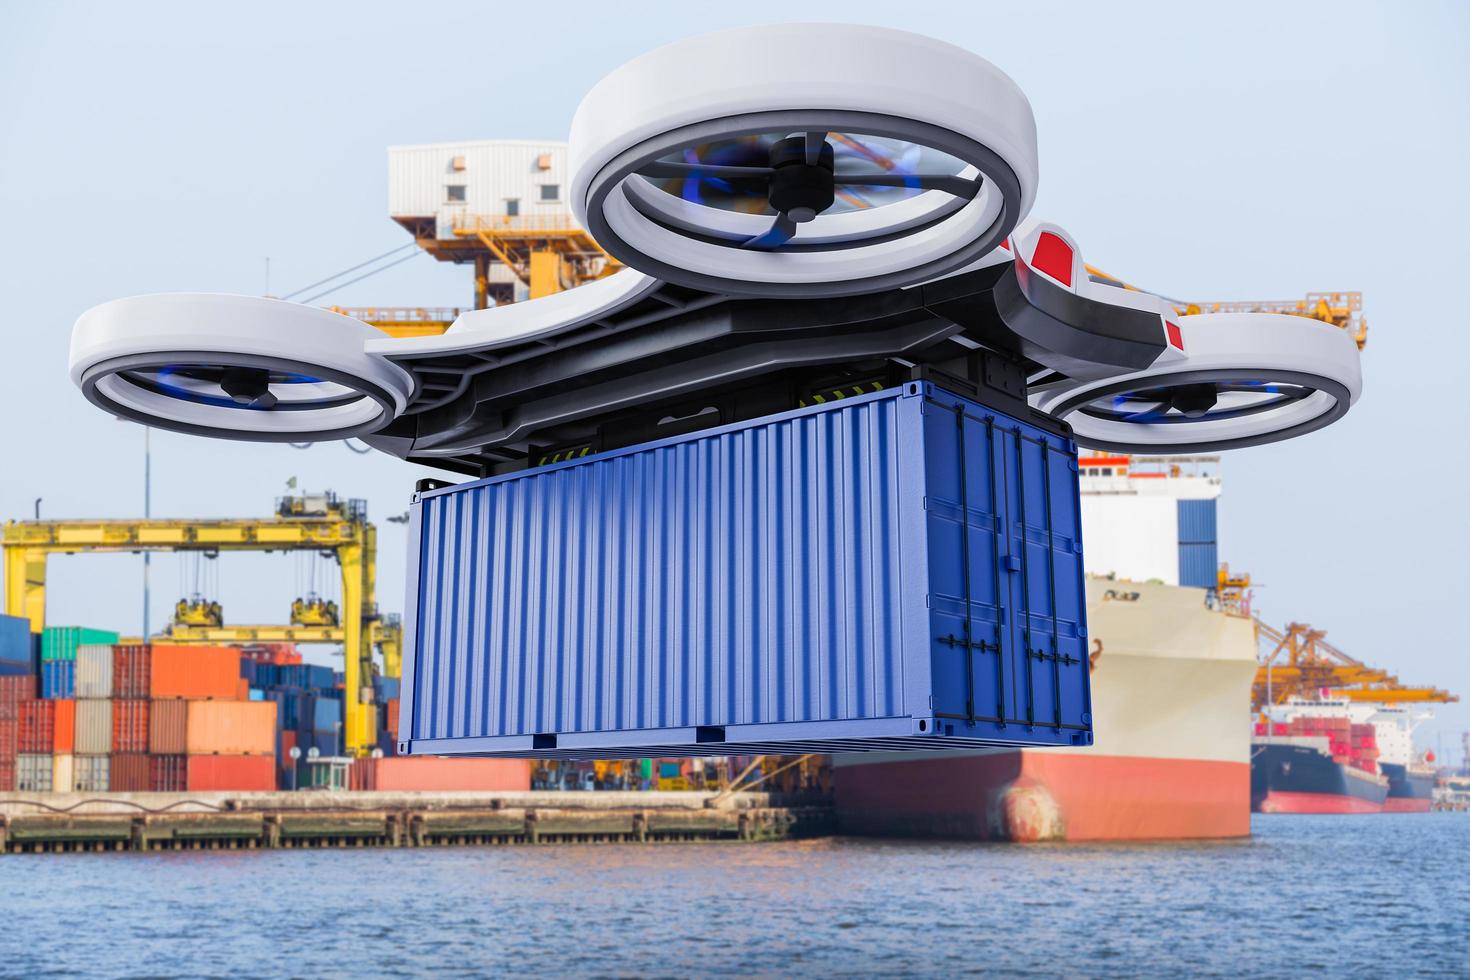 autonome vrachtdrone die container, toekomstig transport en logistiek concept levert foto